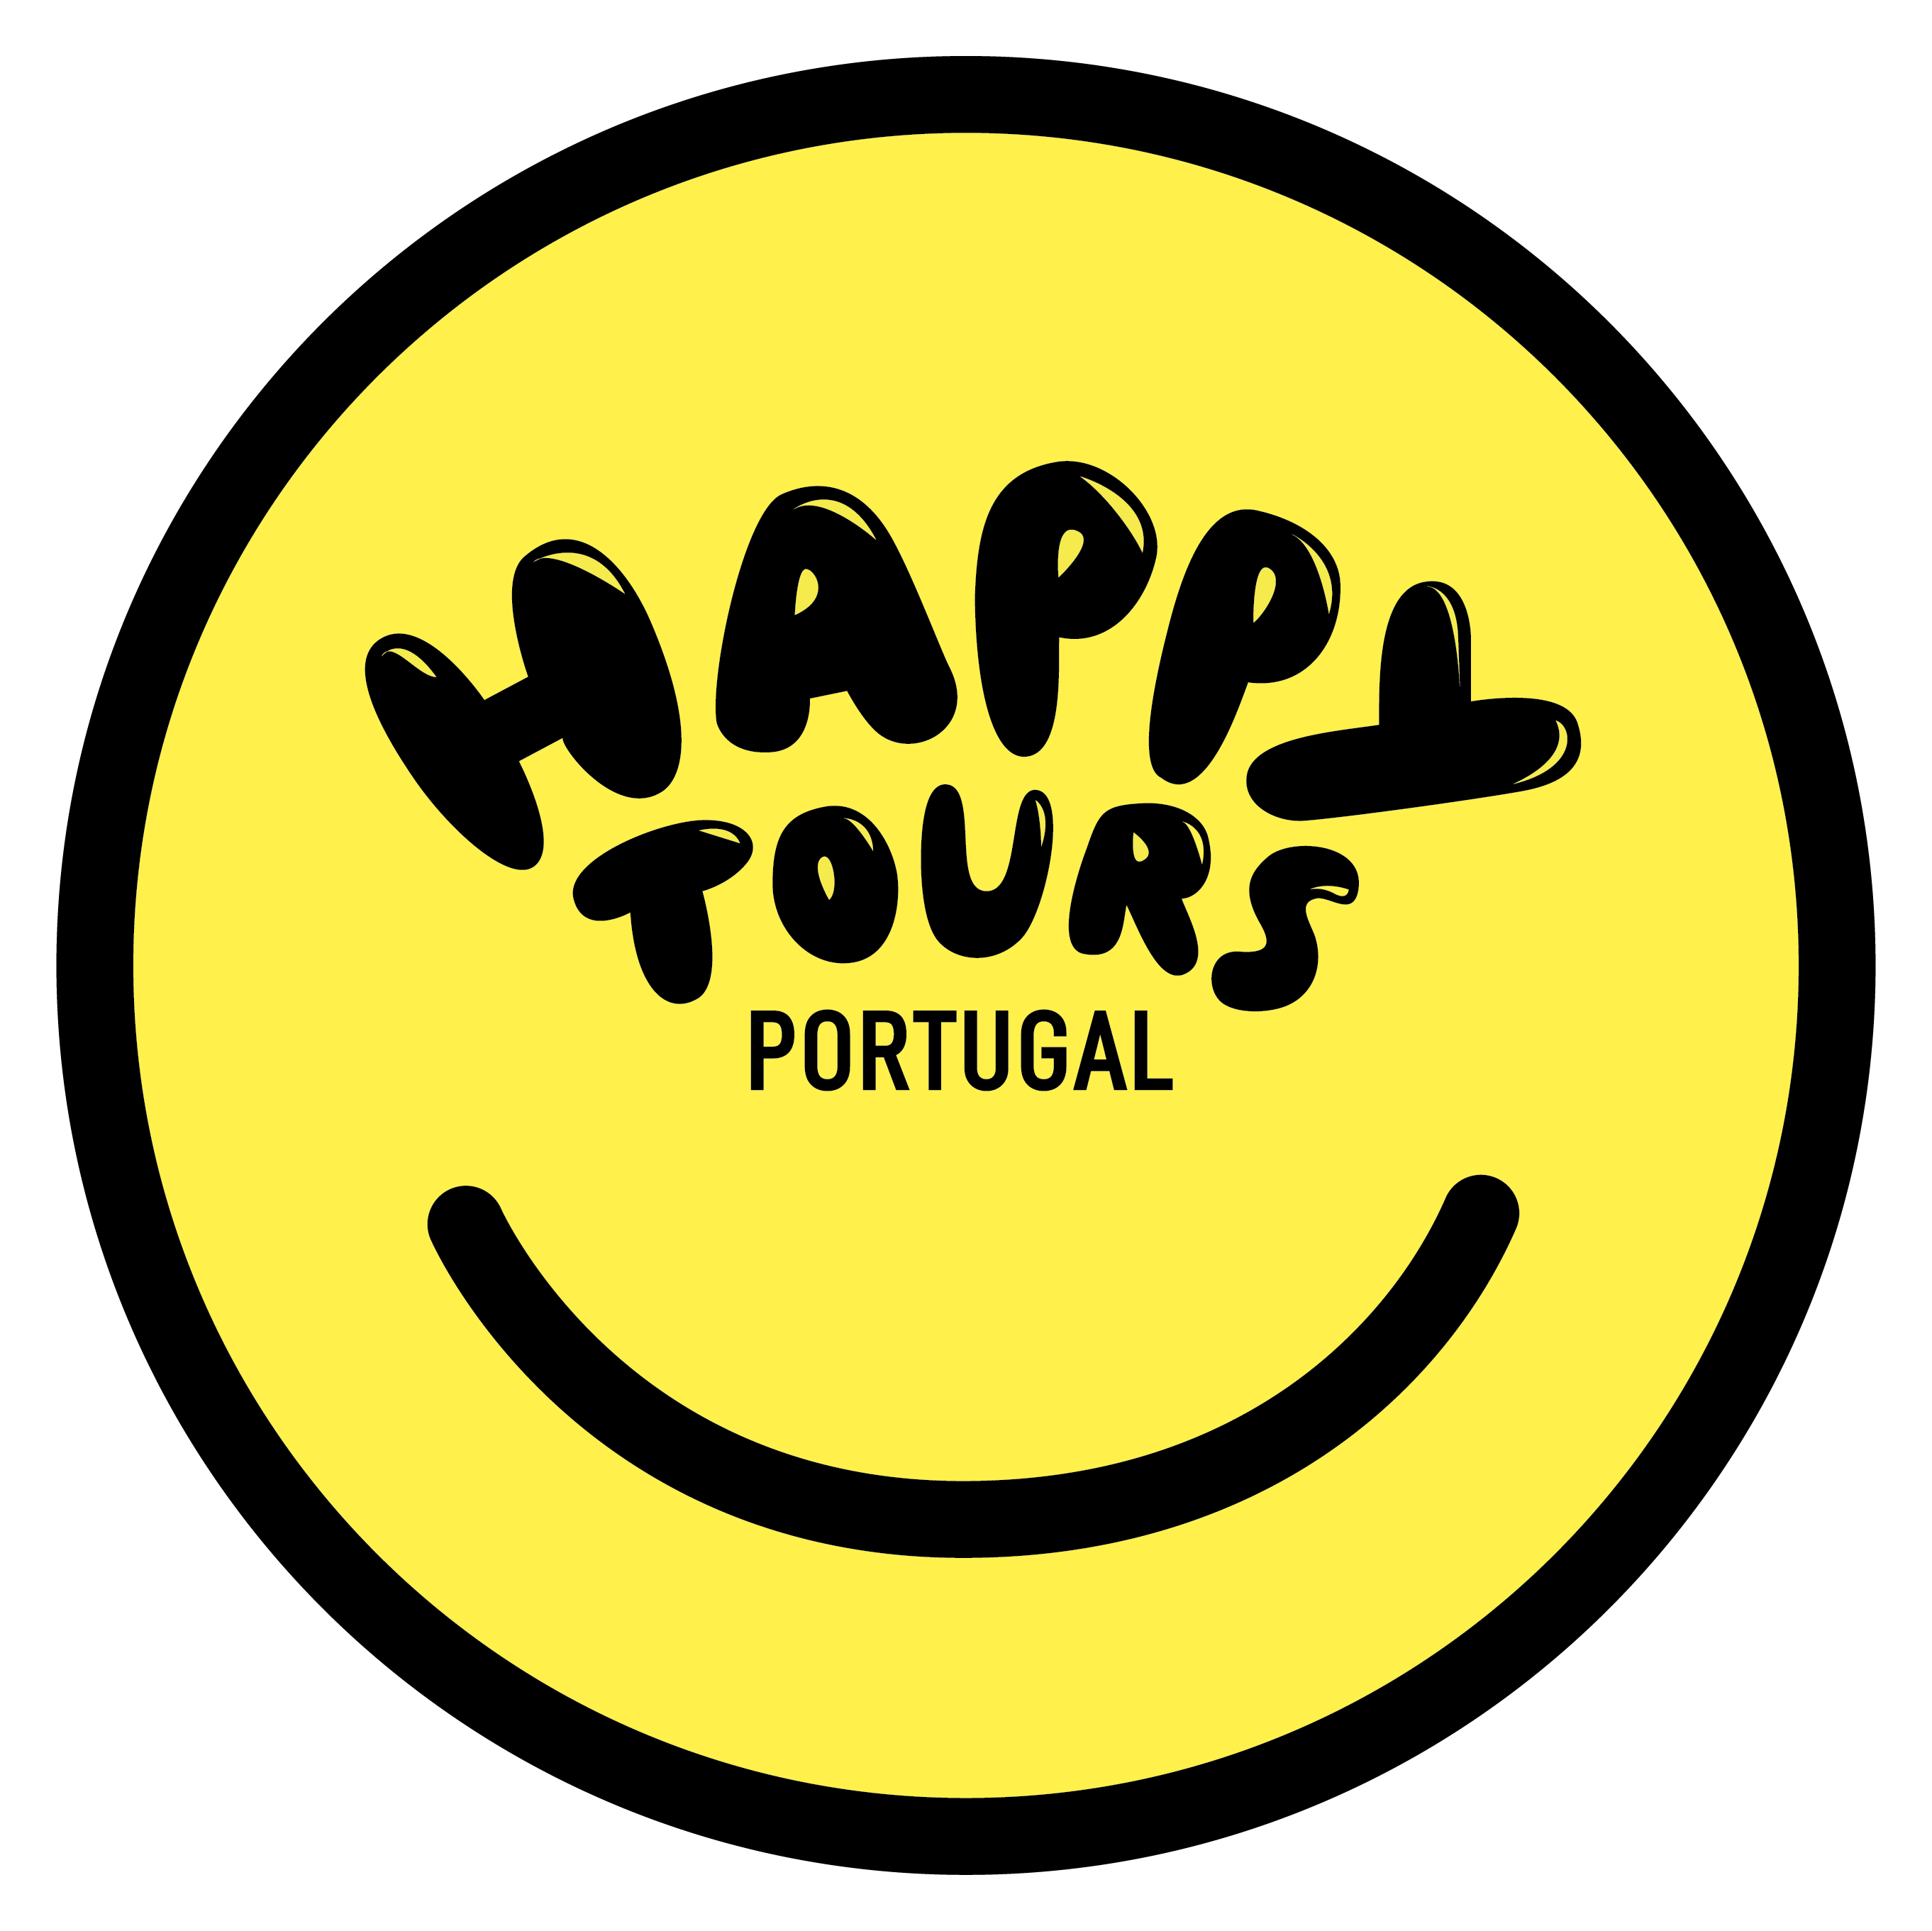 happy tours logo